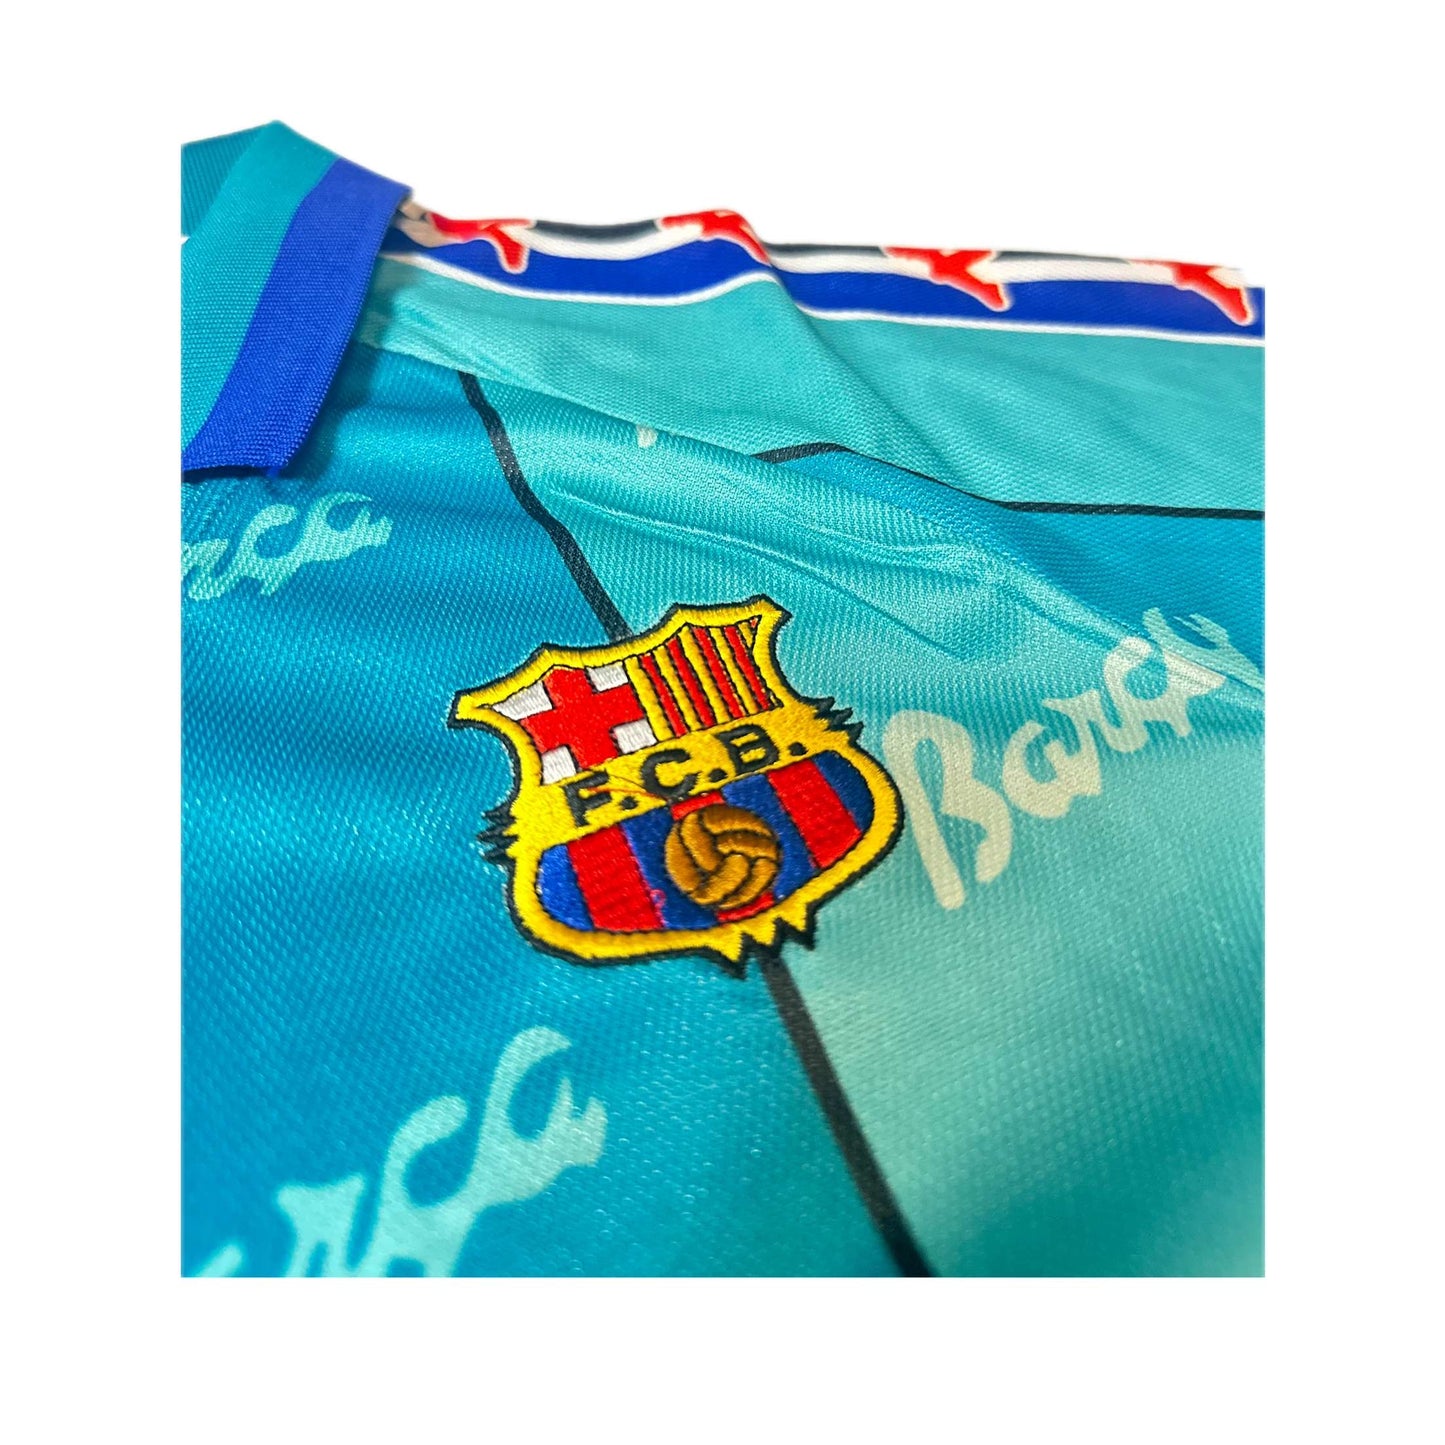 Barcelona 1997 away shirt